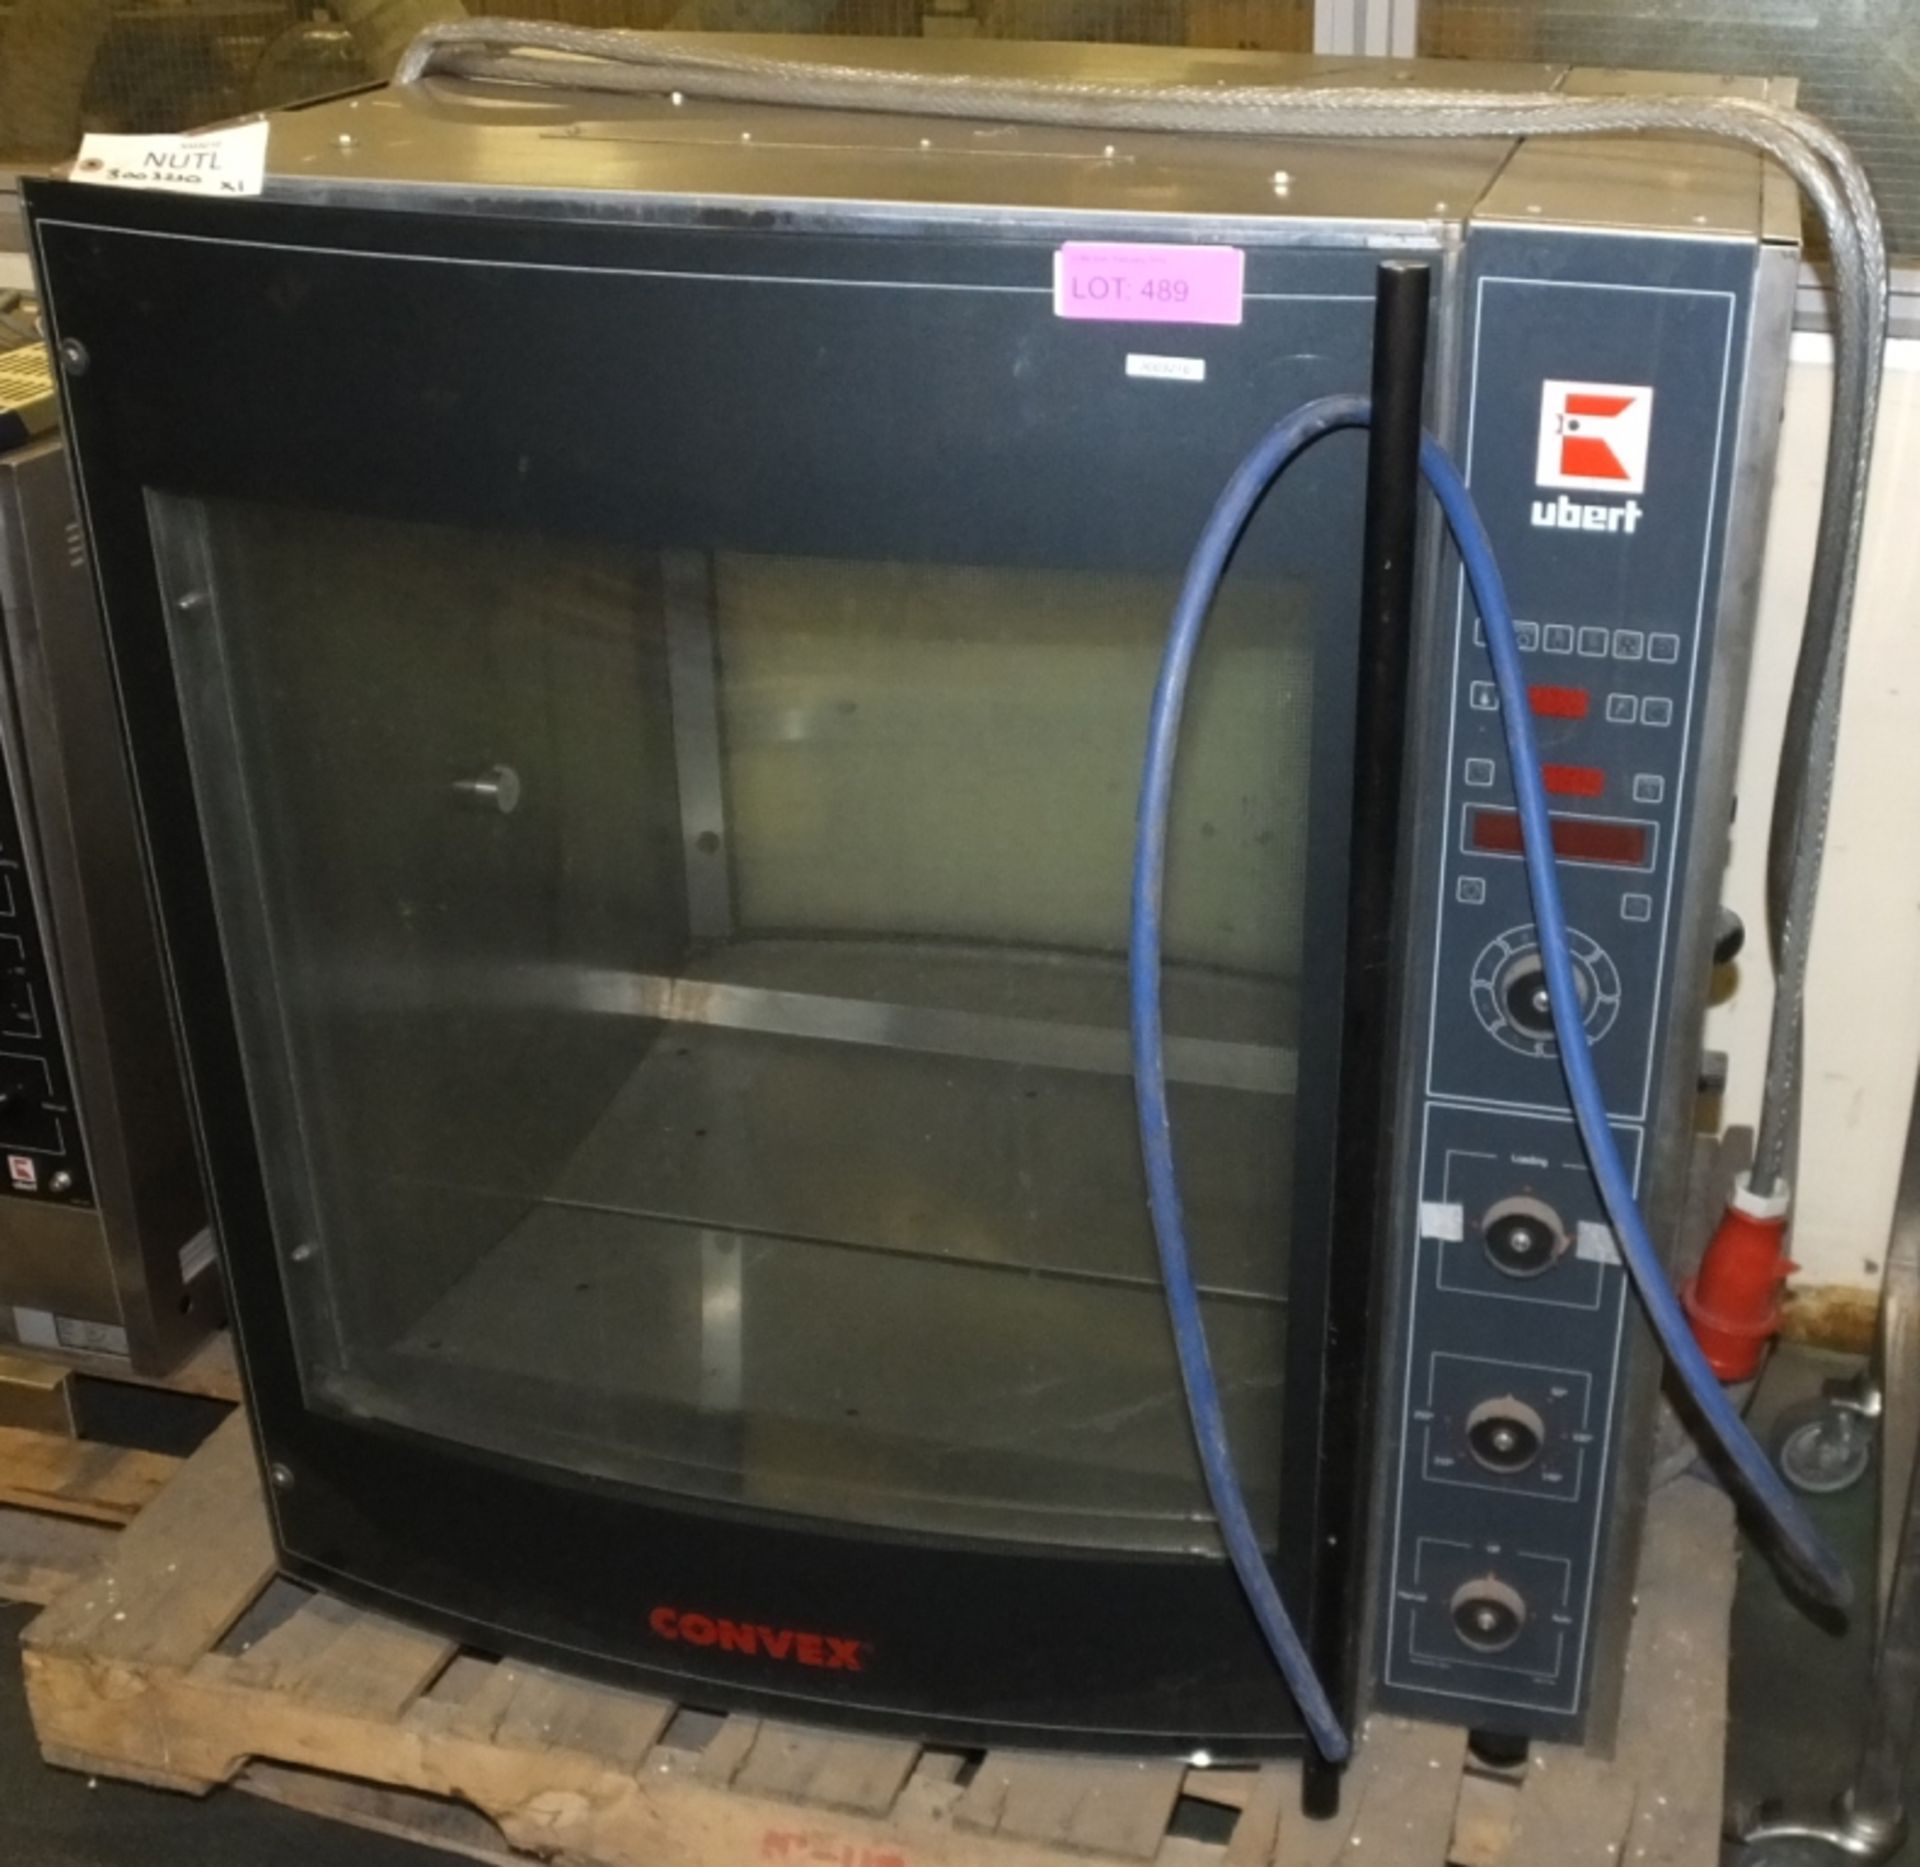 Ubert RT507 Series Convex oven - 400v 3 Phase